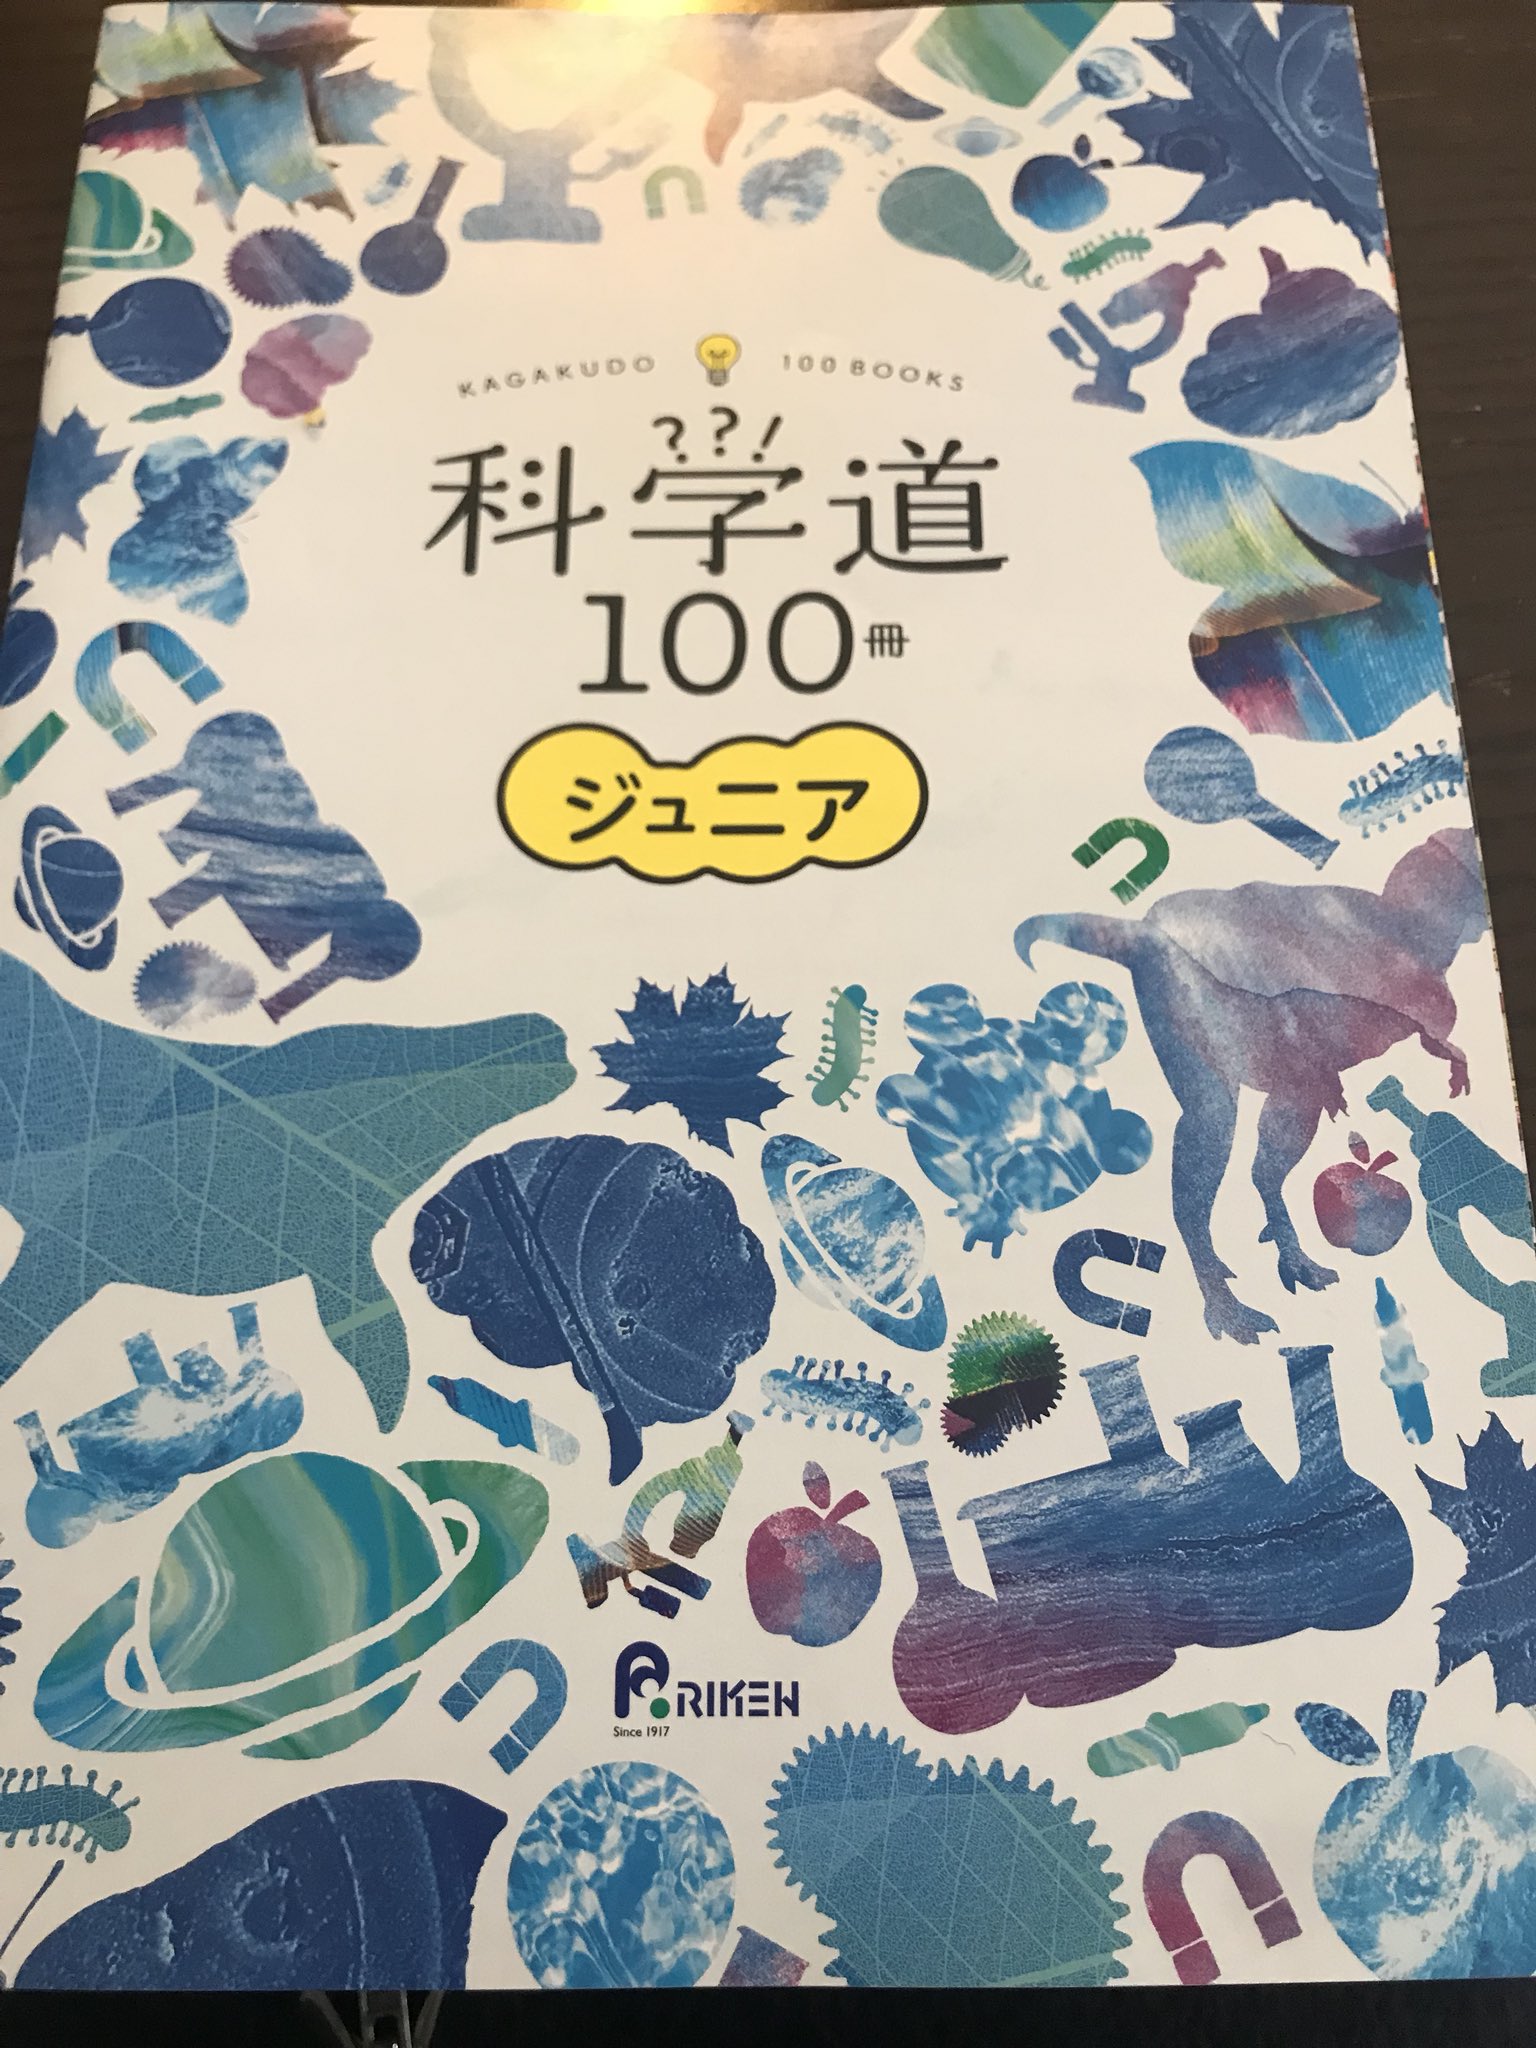 Kimiyo Hayashi 林公代🚀 on Twitter: "本屋さんで理化学研究所などが作る「科学道100冊ジュニア」冊子発見。私の